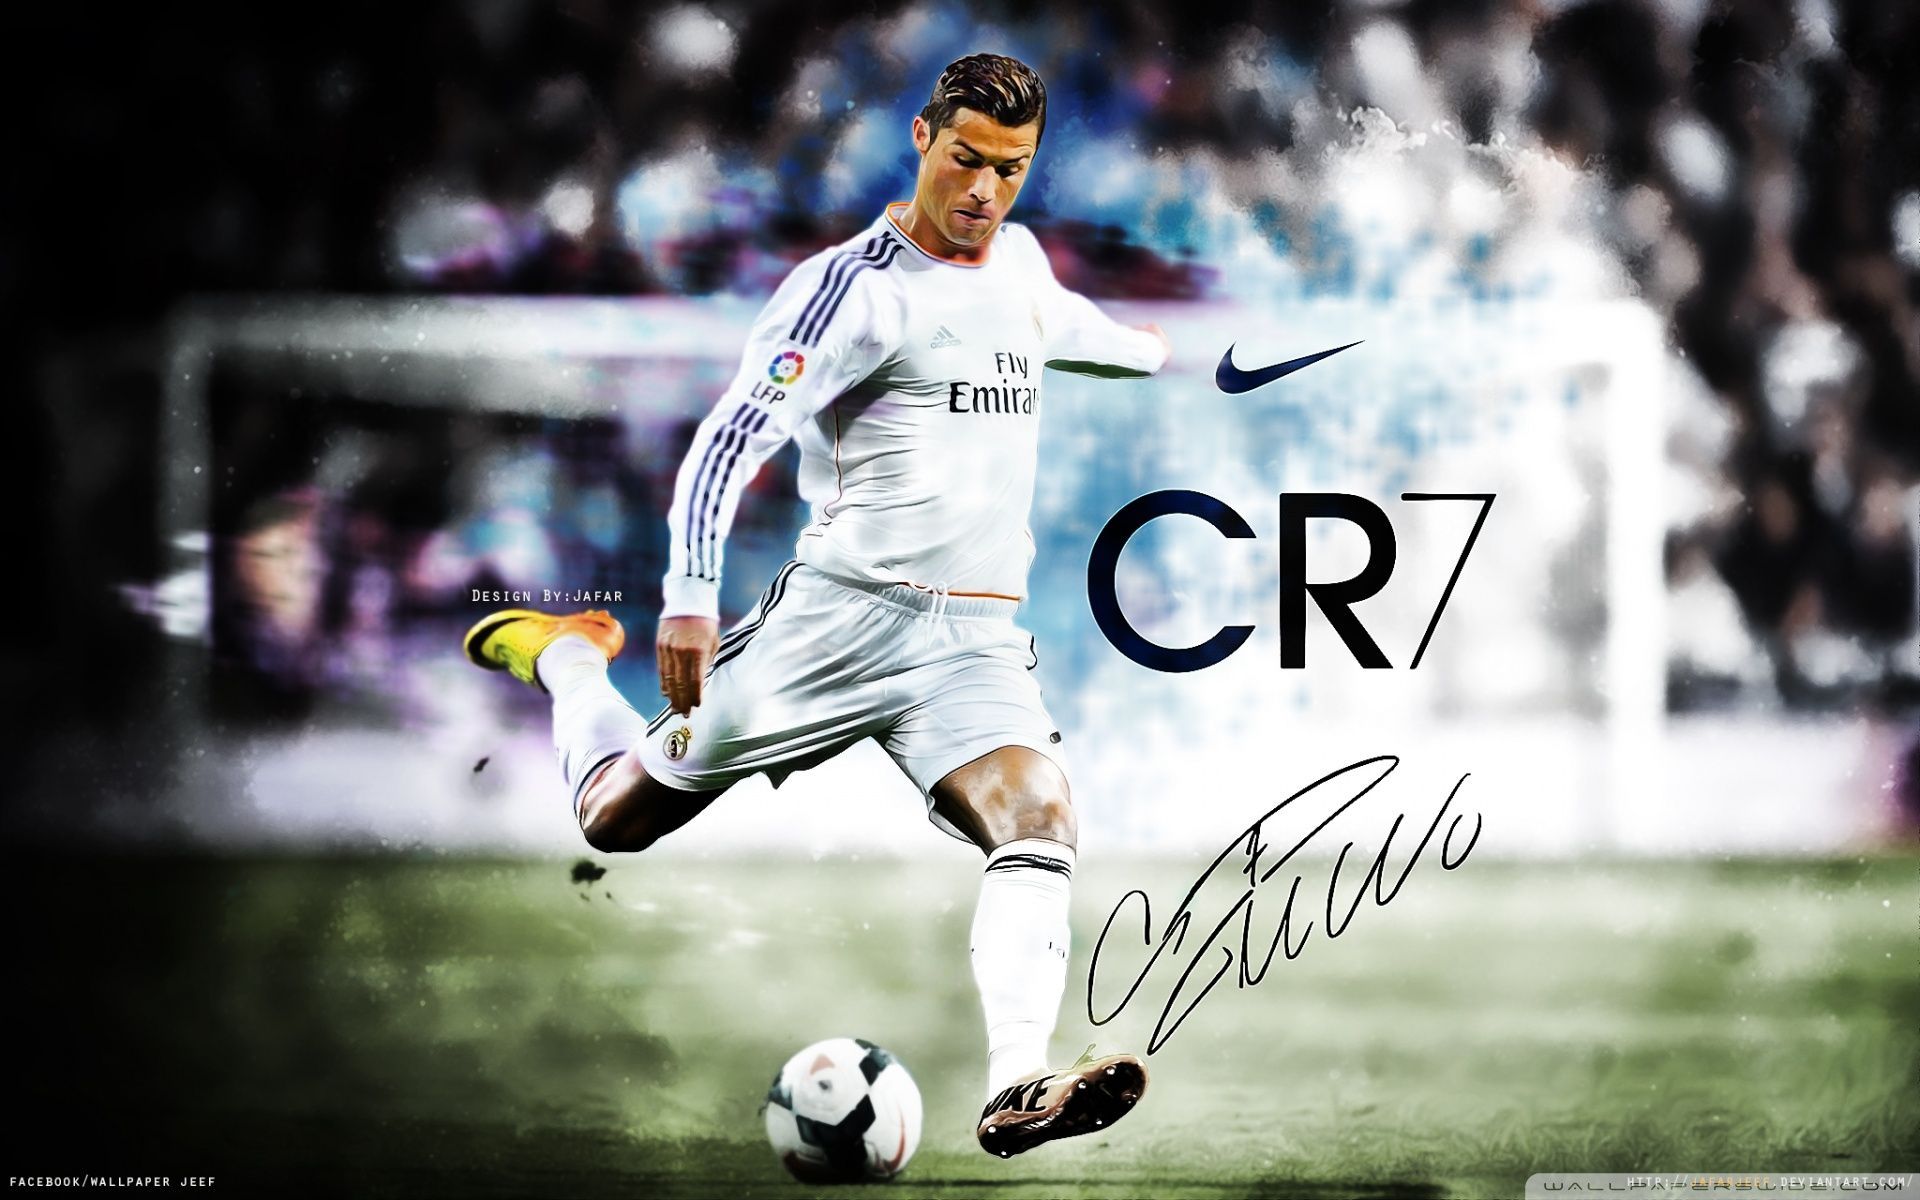 Más de 30 fondos de pantalla de Cristiano Ronaldo grandes - Descarga